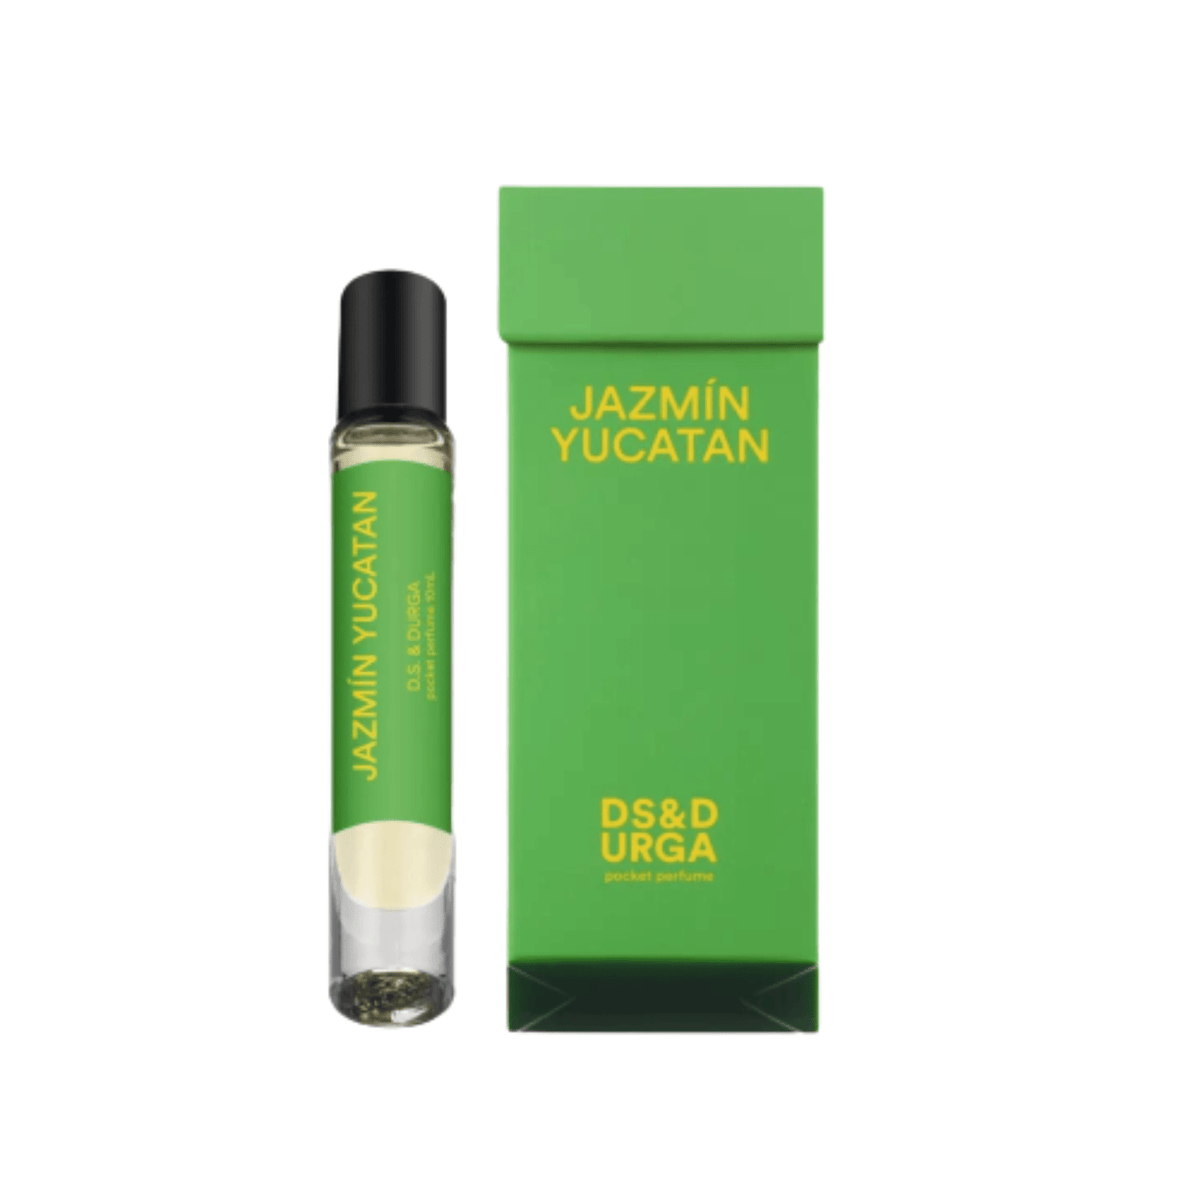 Primary Image of Pocket Perfume - Jazmin Yucatan Roll-On Oil